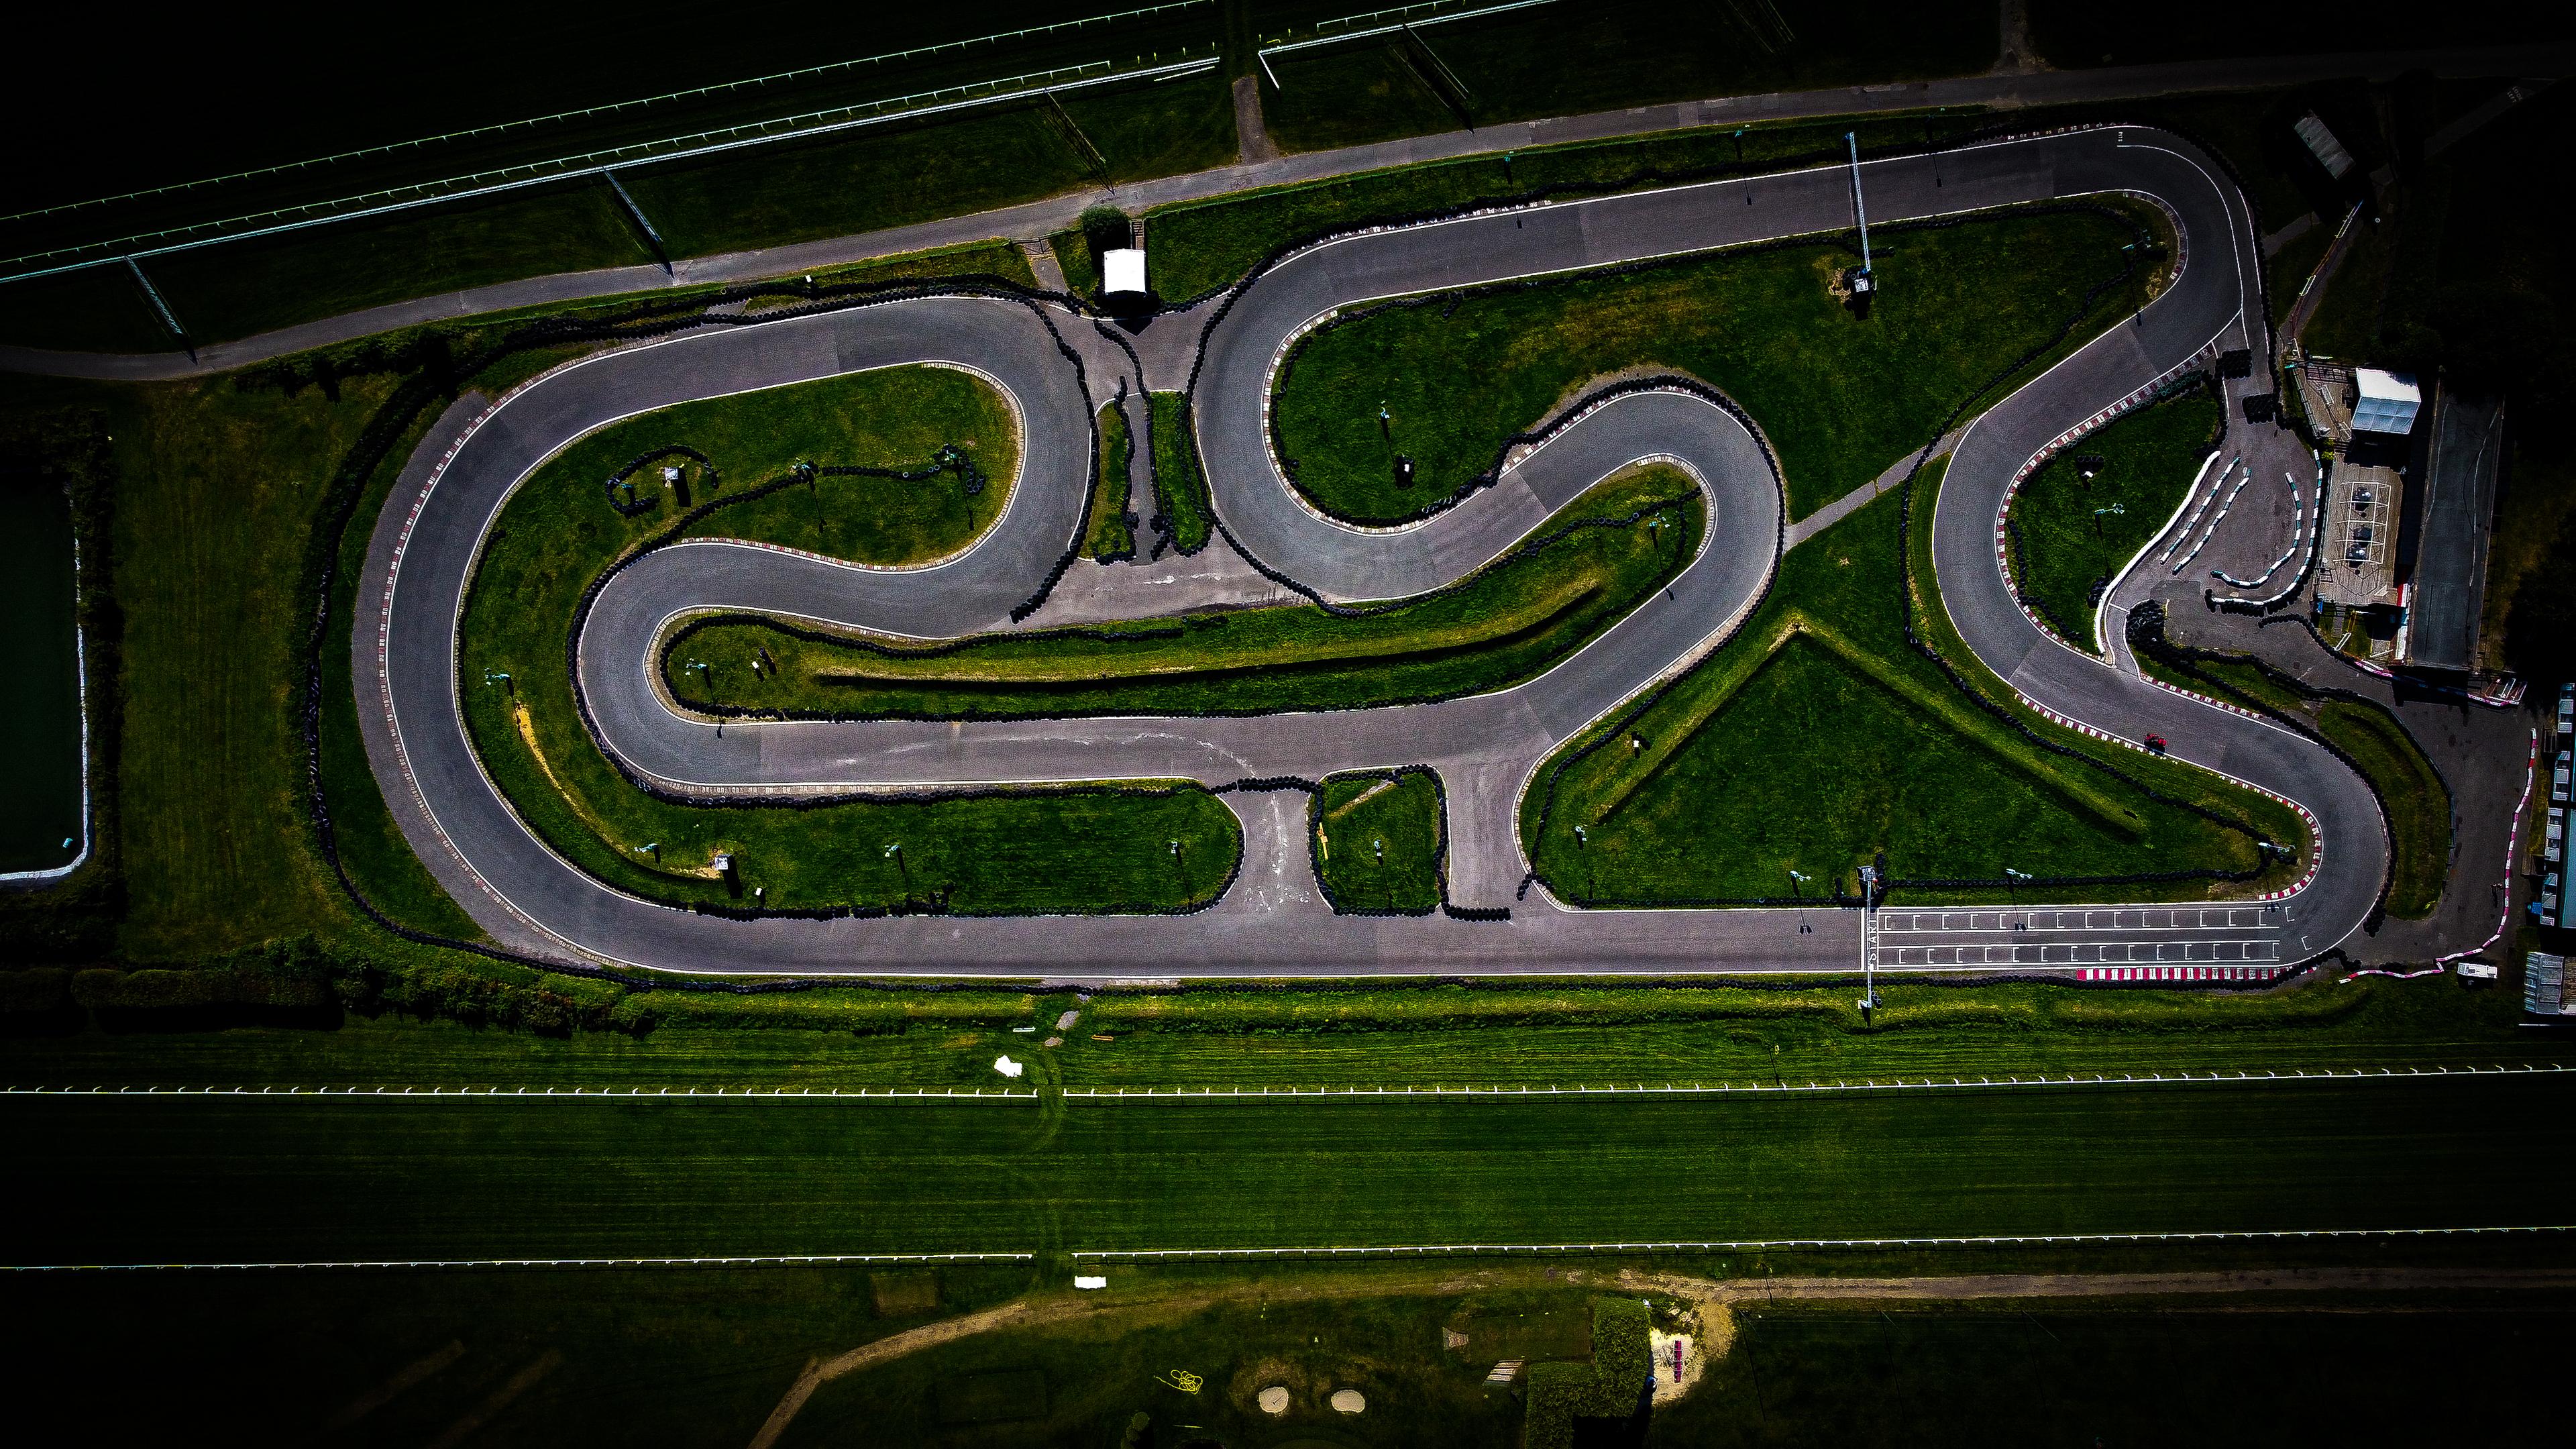 Daytona Sandown Park, GP Circuit (900m) photo #1